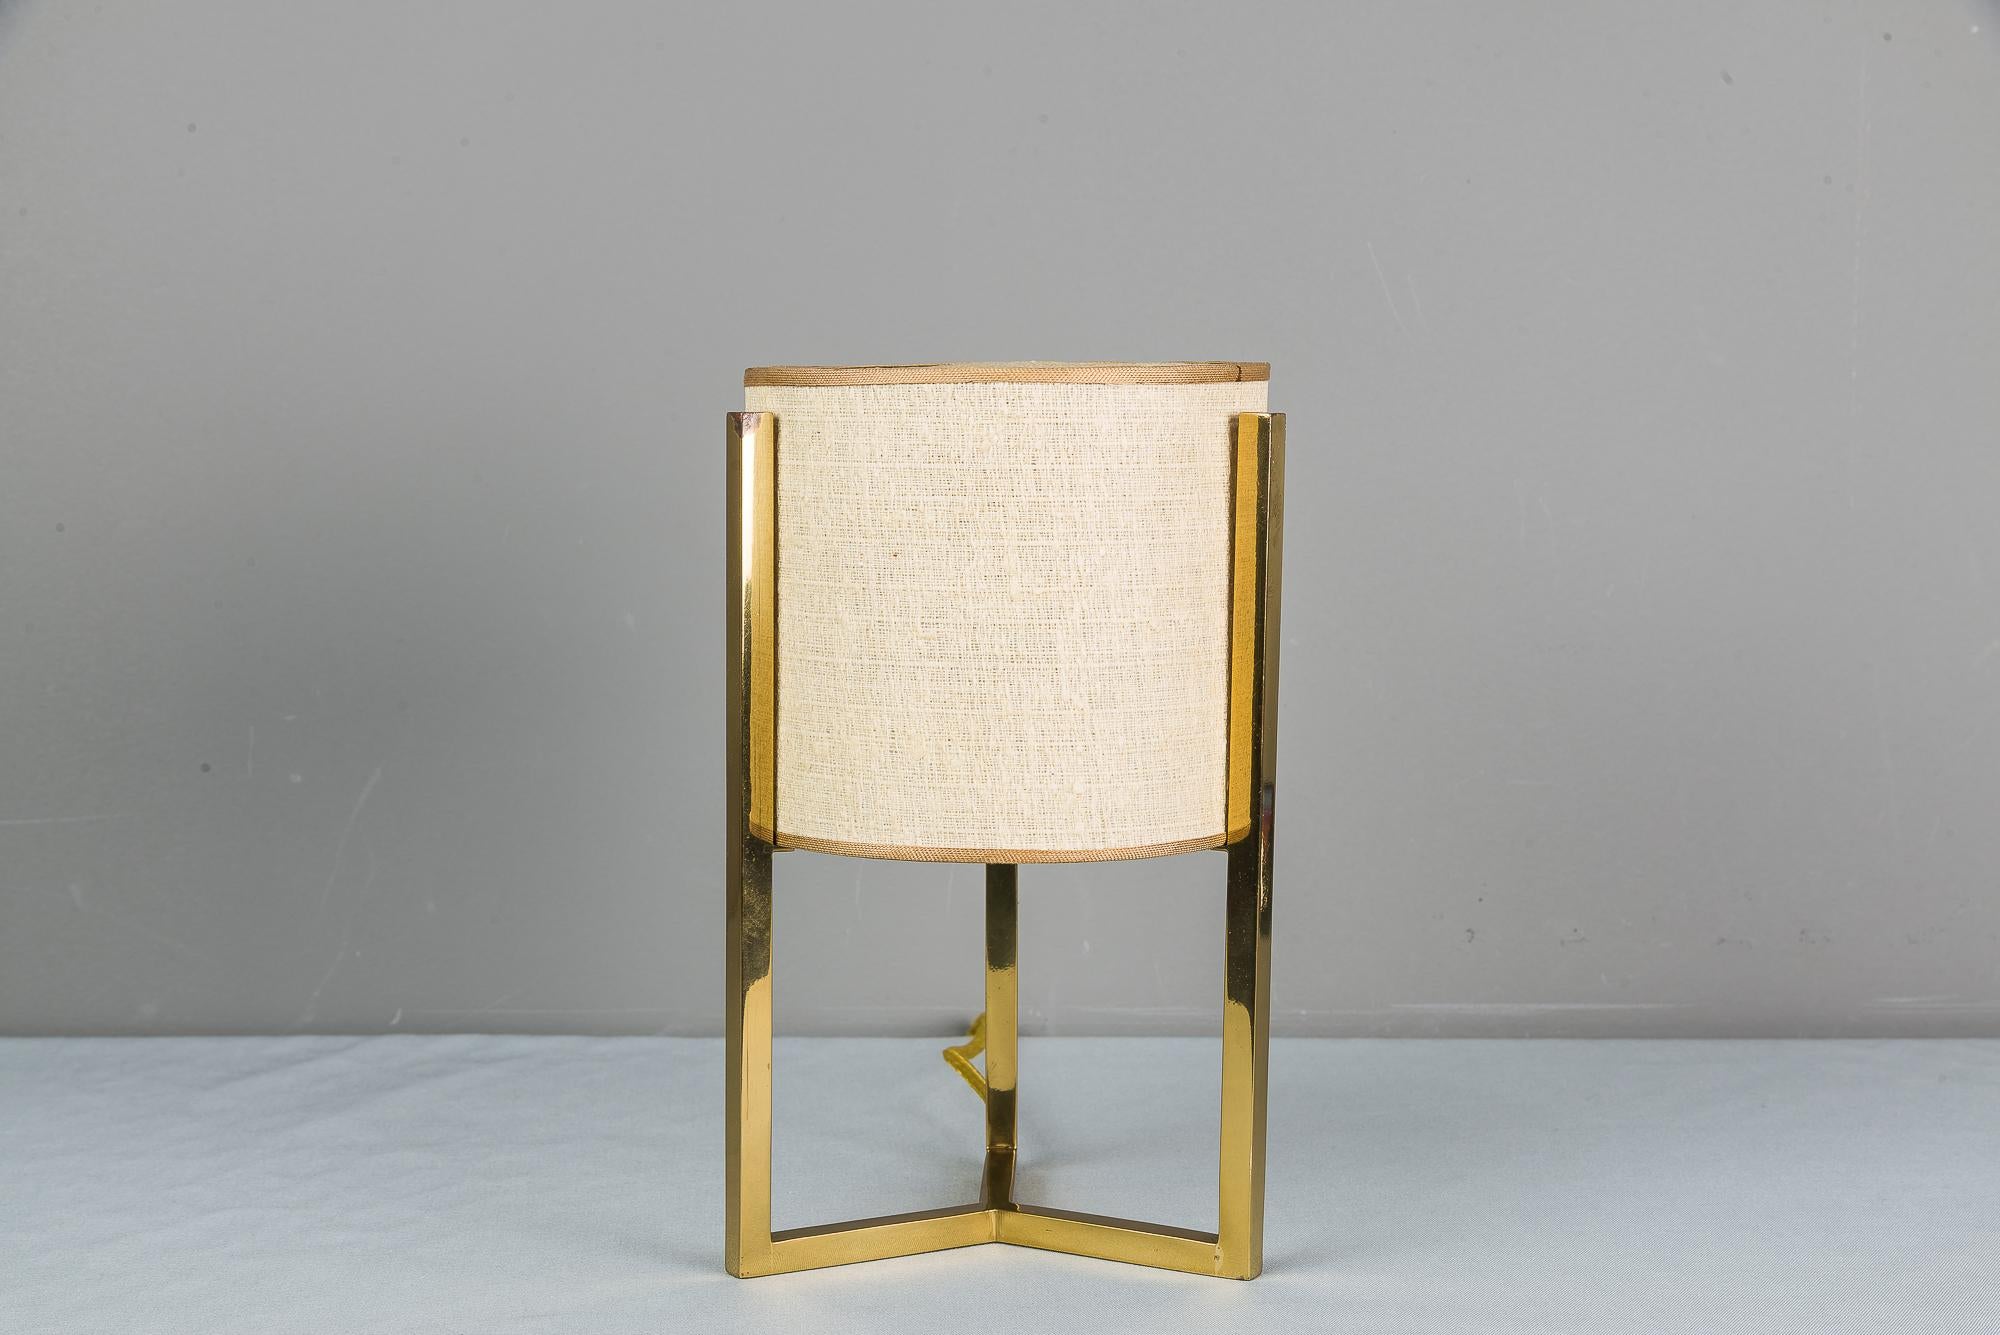 J.T.Kalmar table lamp circa 1960s
Original condition
Original fabric shade.